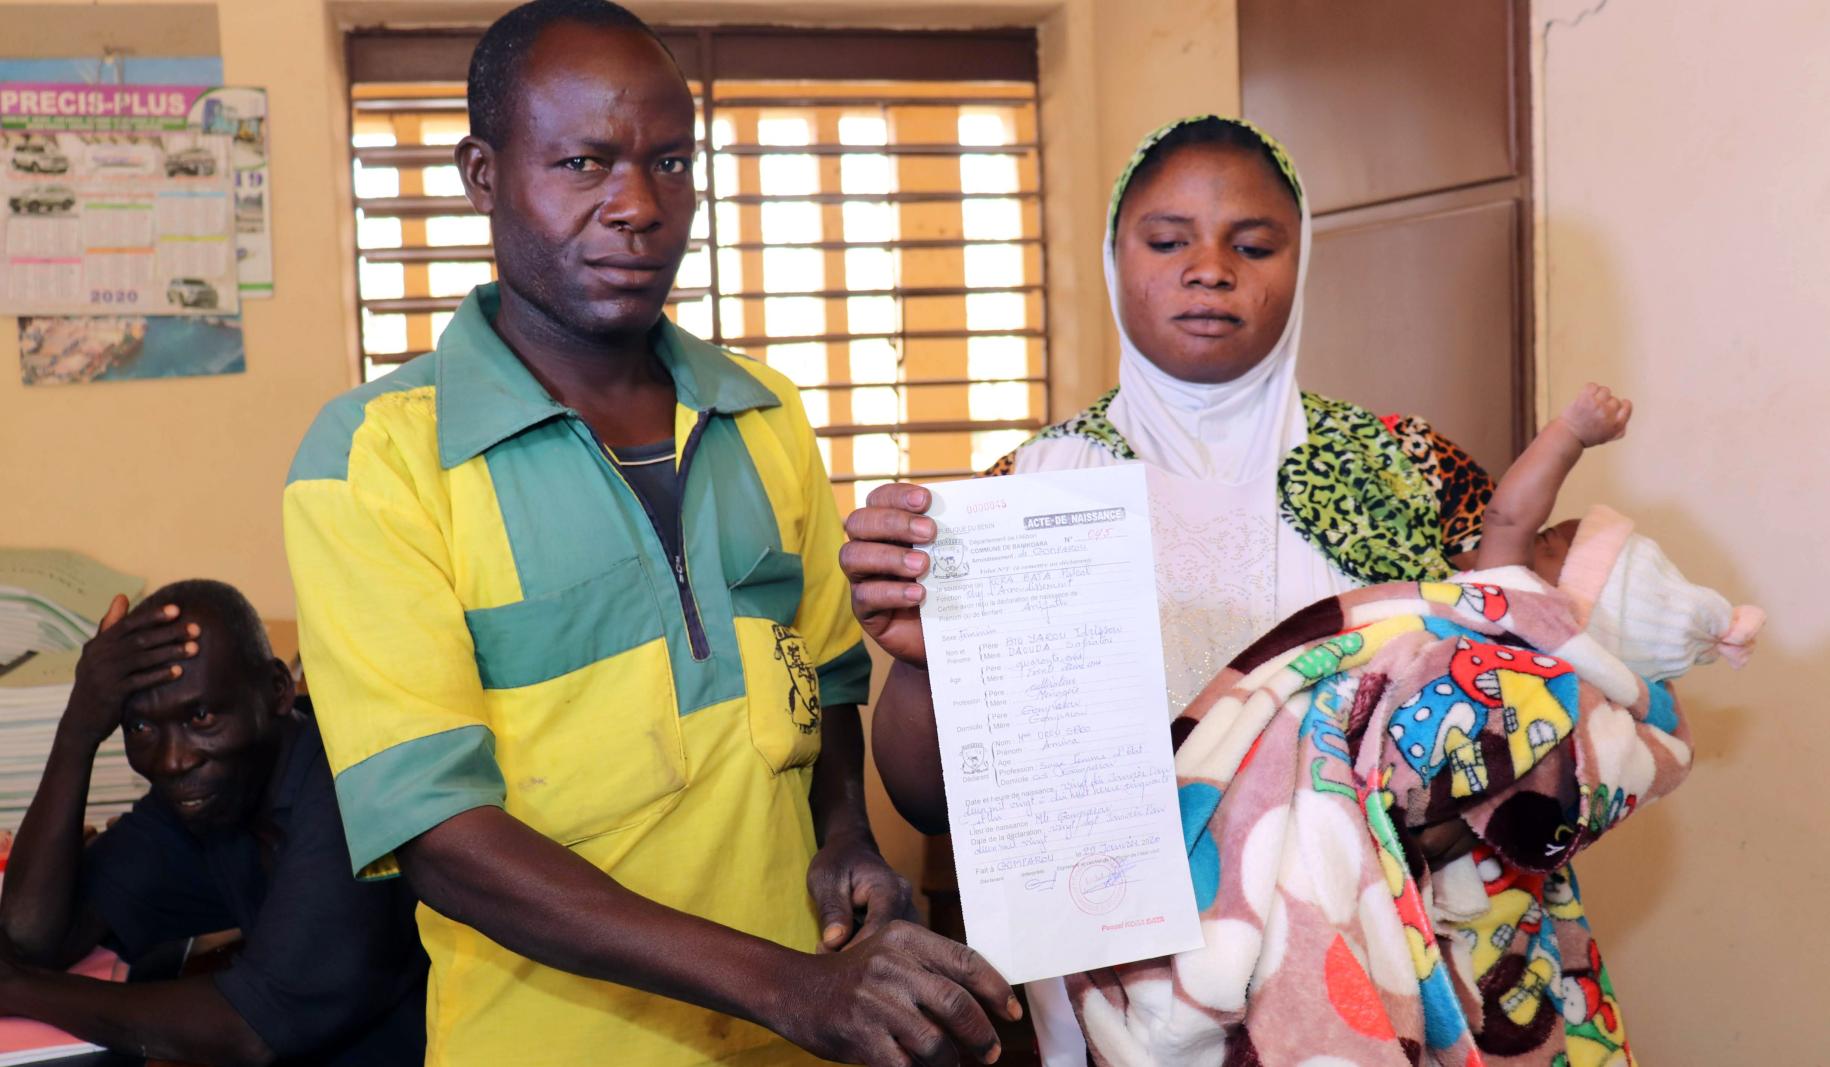 After an arduous process, Safiatou and her husband Idrissou receive their newborn's birth certificate.